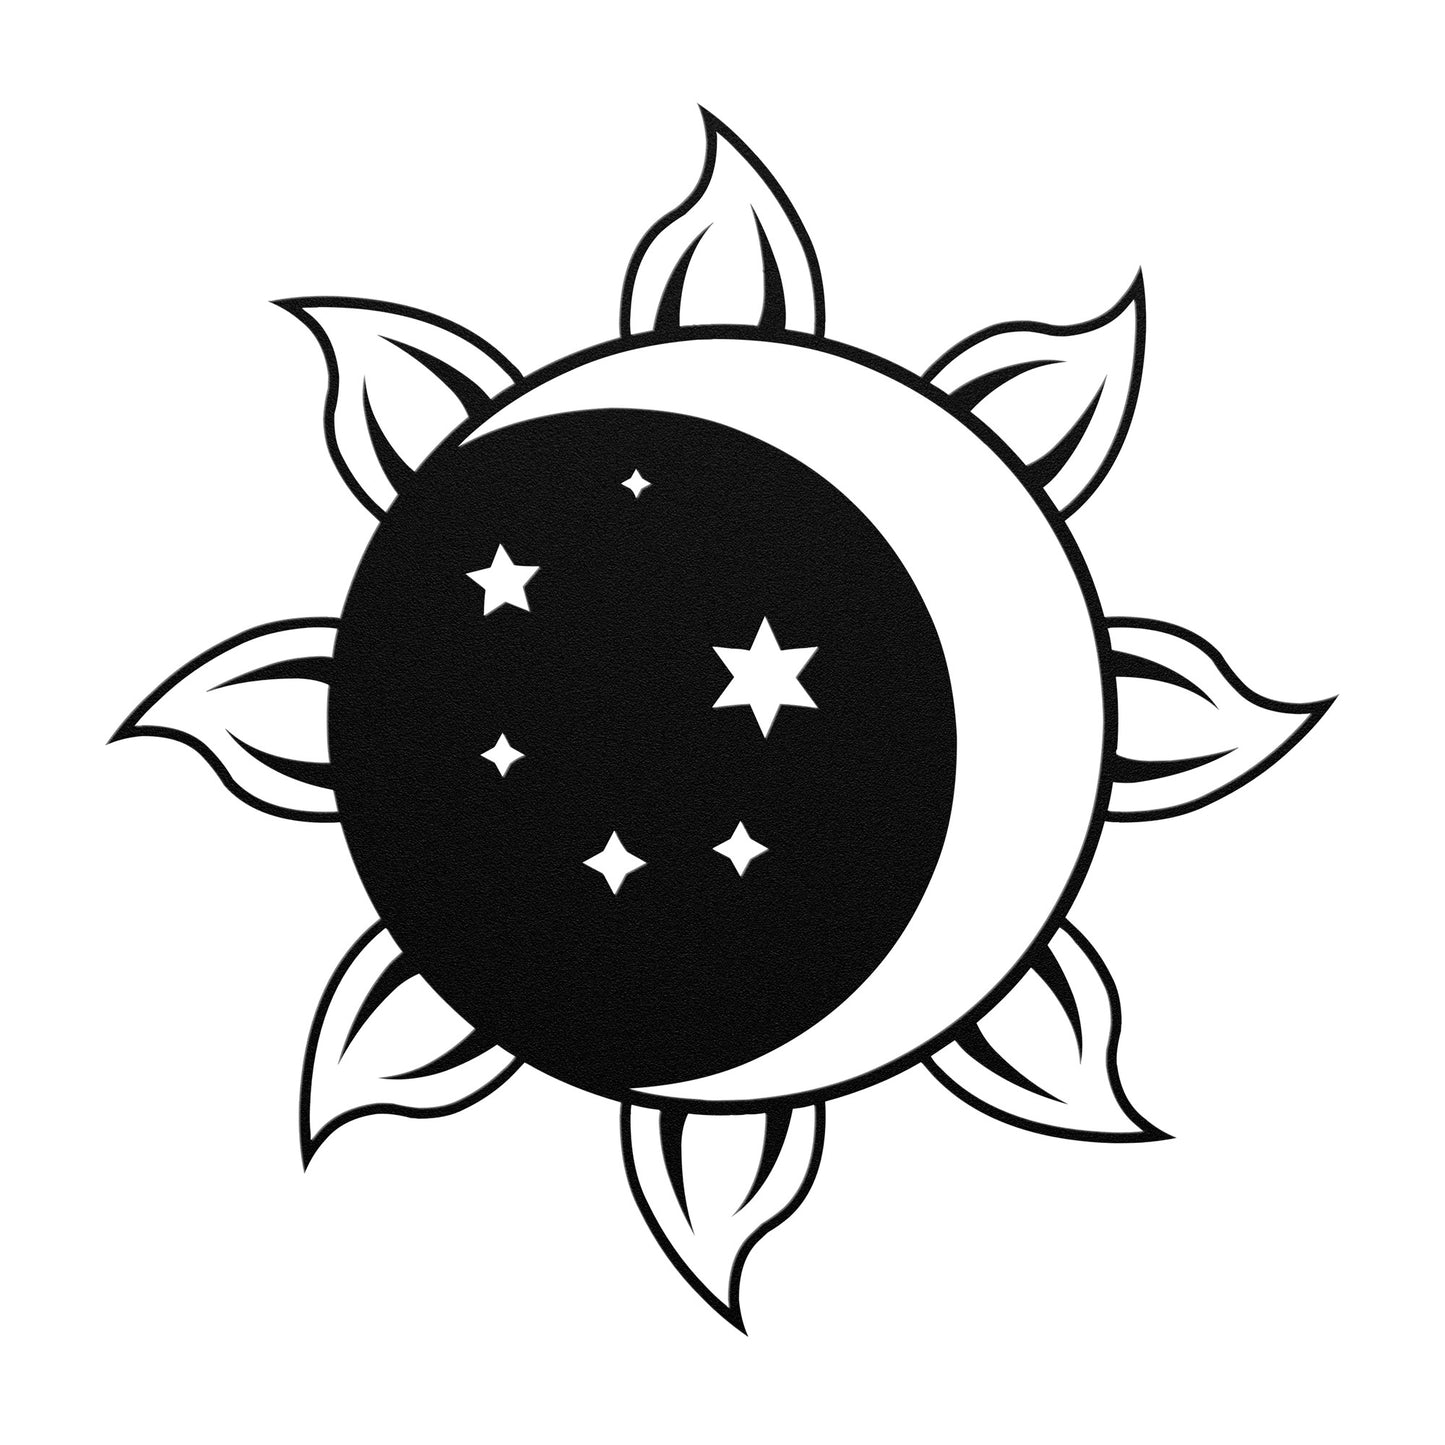 Sun Moon and Stars Metal Wall Art